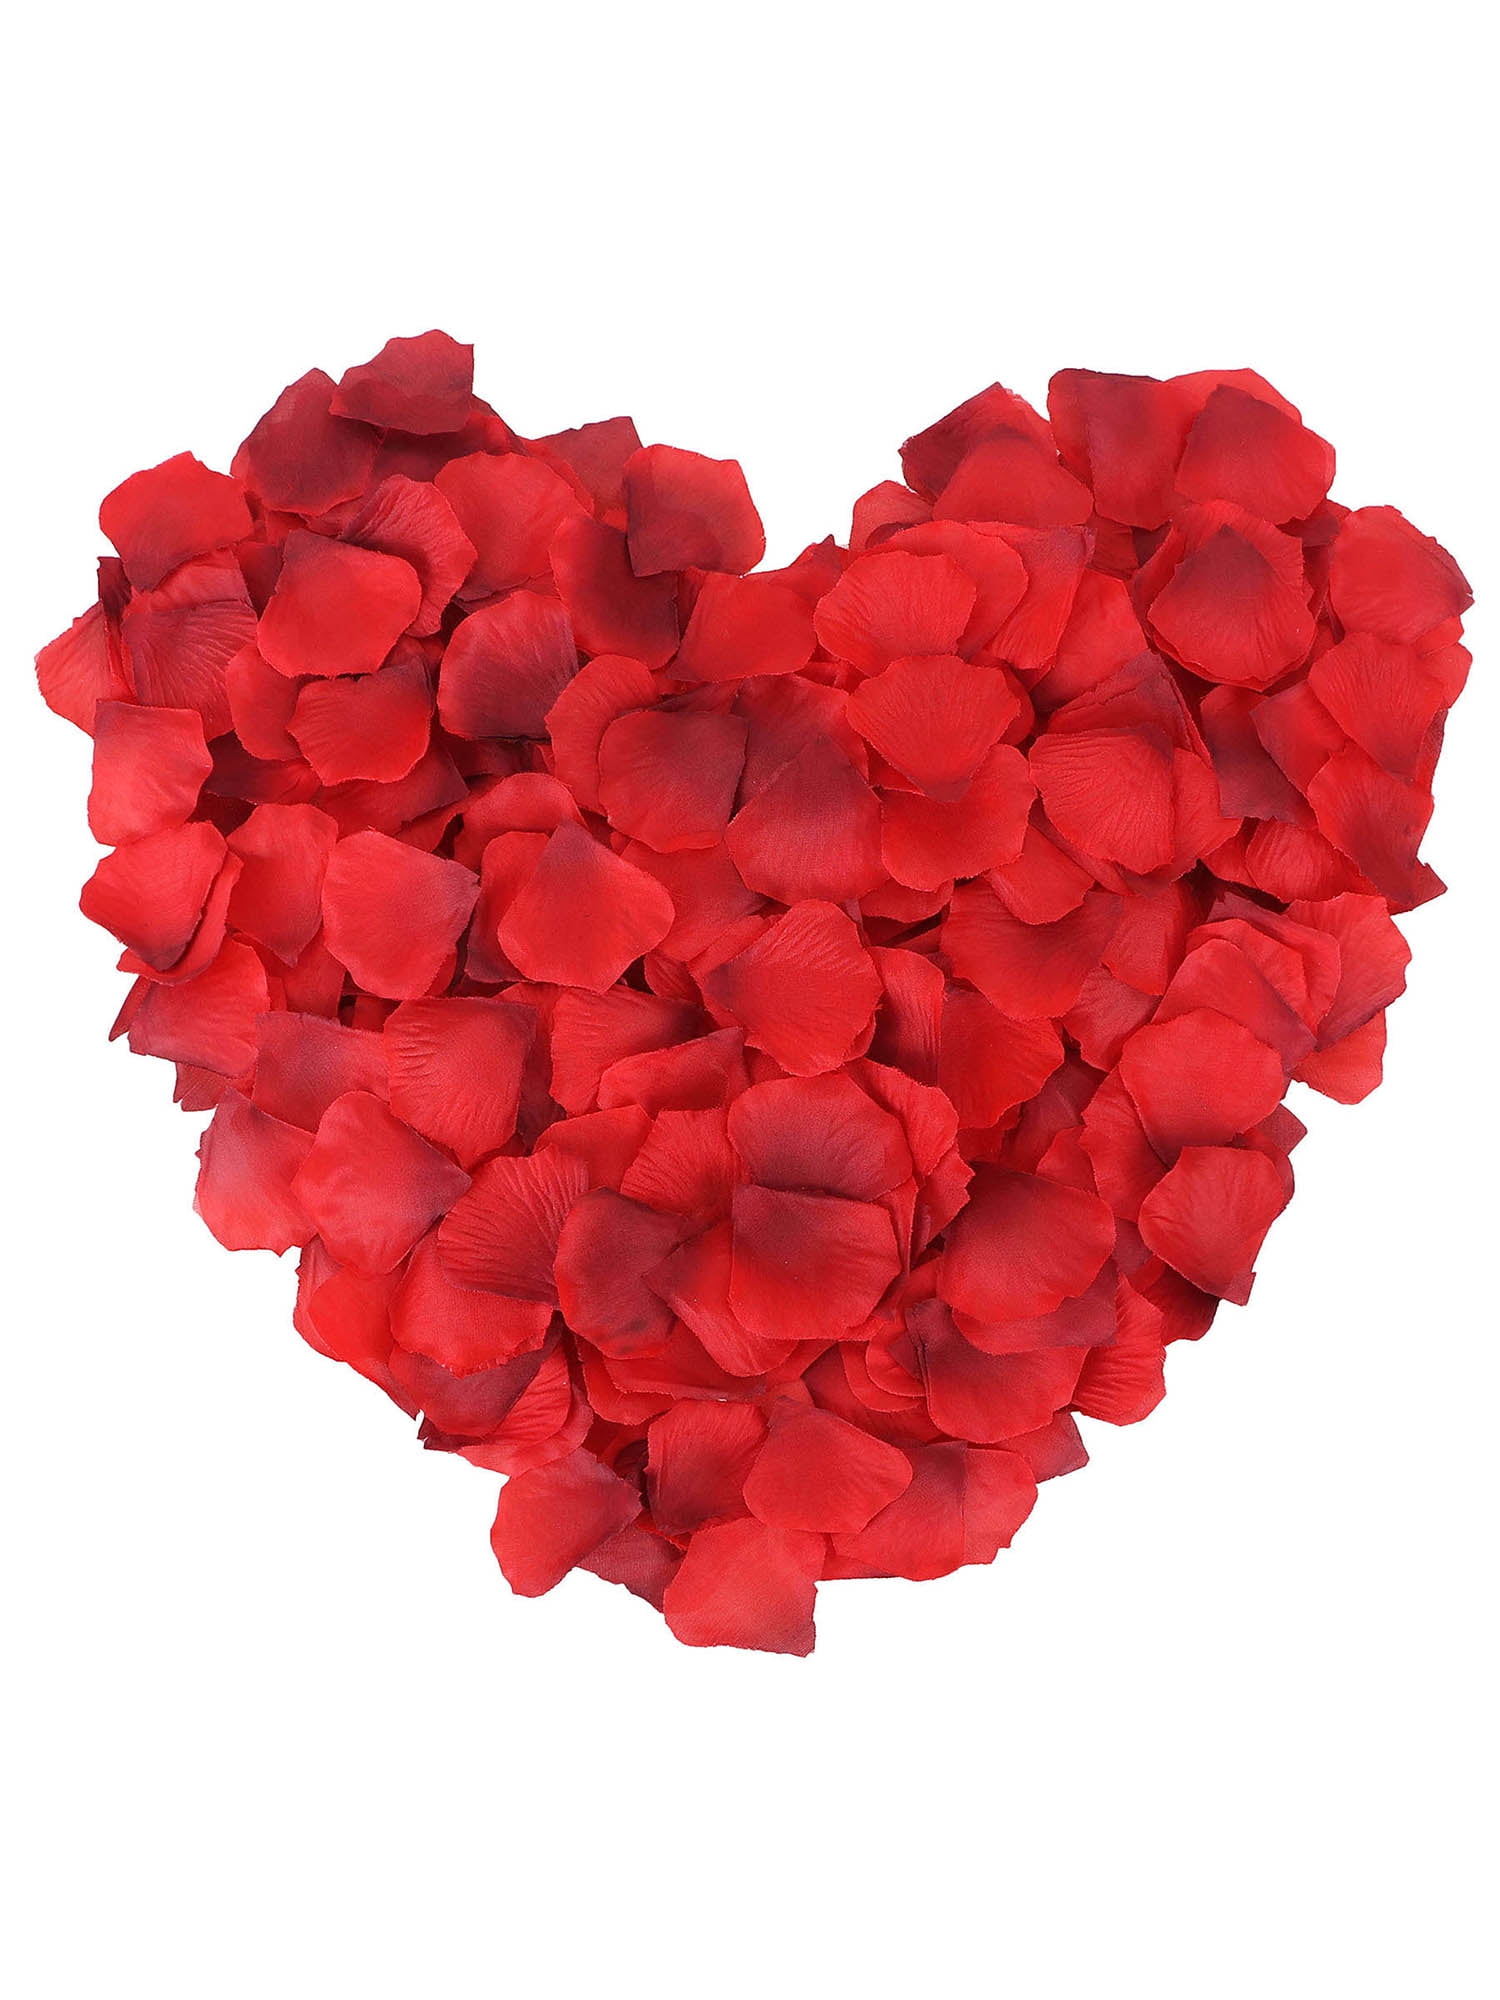 Artificial Silk Rose Petals Party Valentine's Bridal Flower Wedding 300 pcs~Red